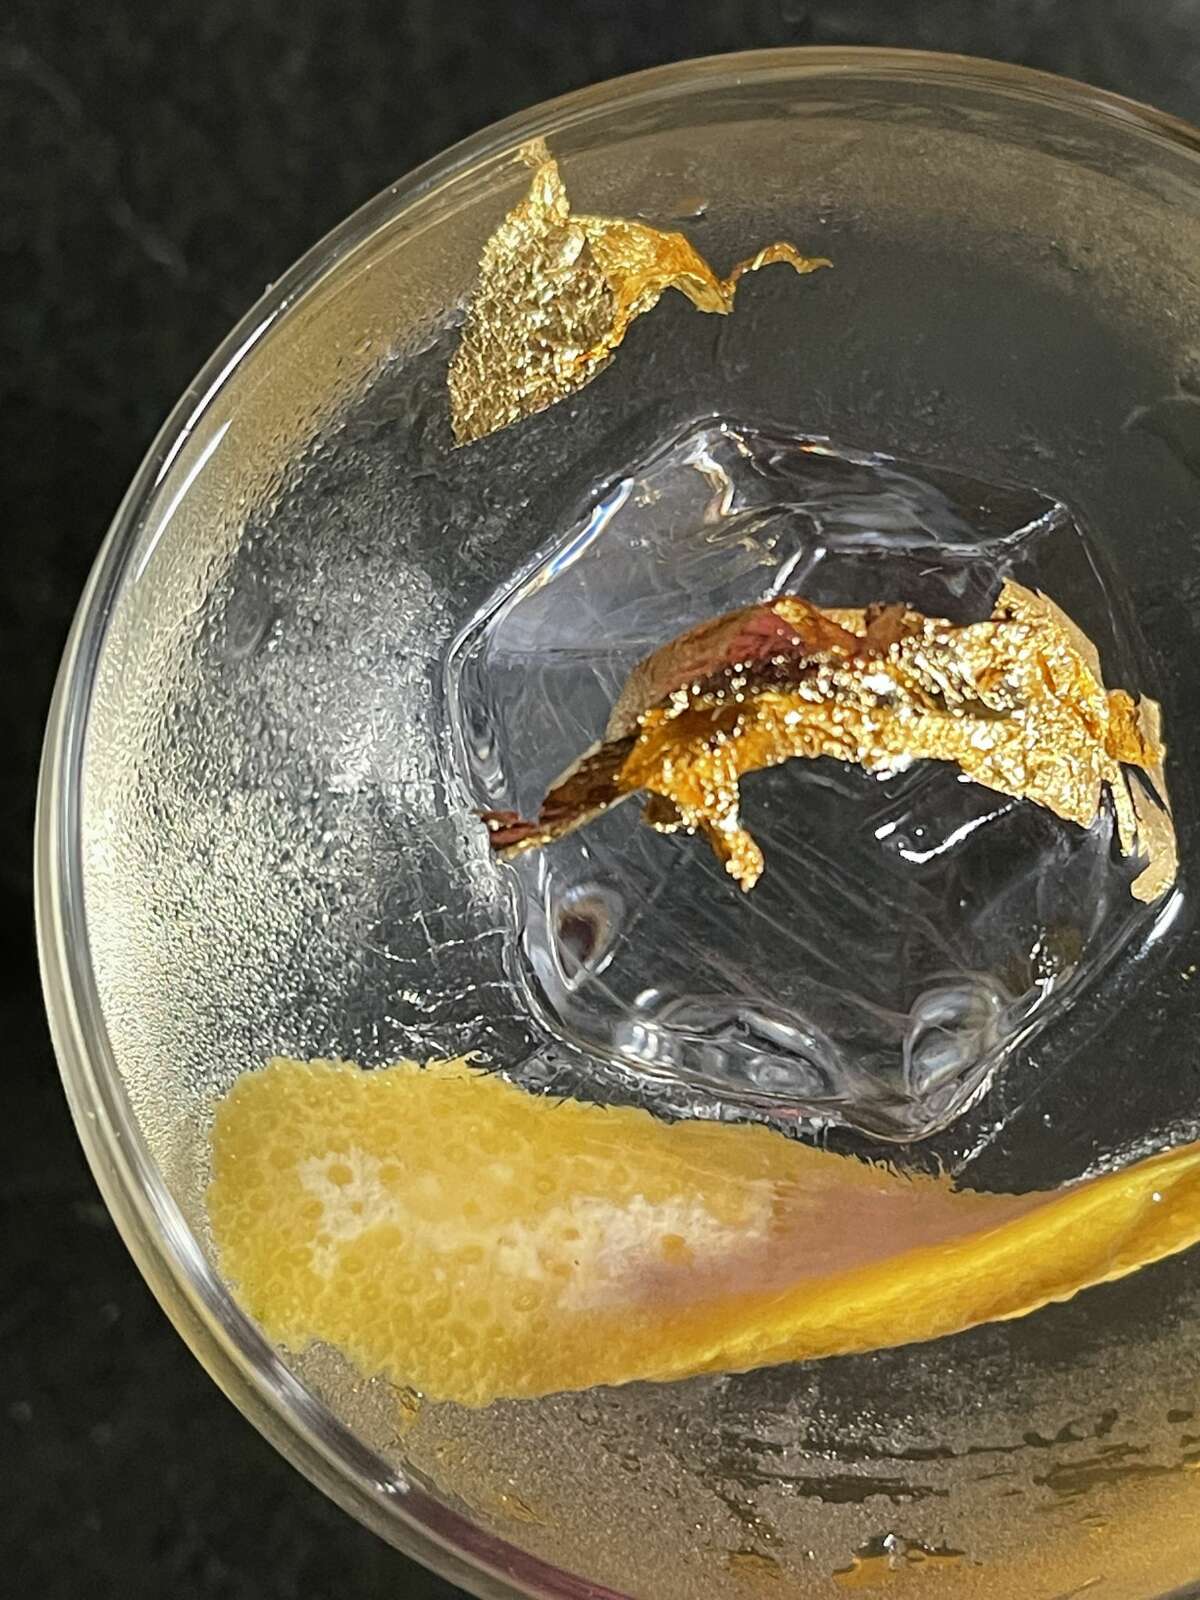 RHK's Diamond and Gold Negroni cocktail, with 24-karat gold flakes